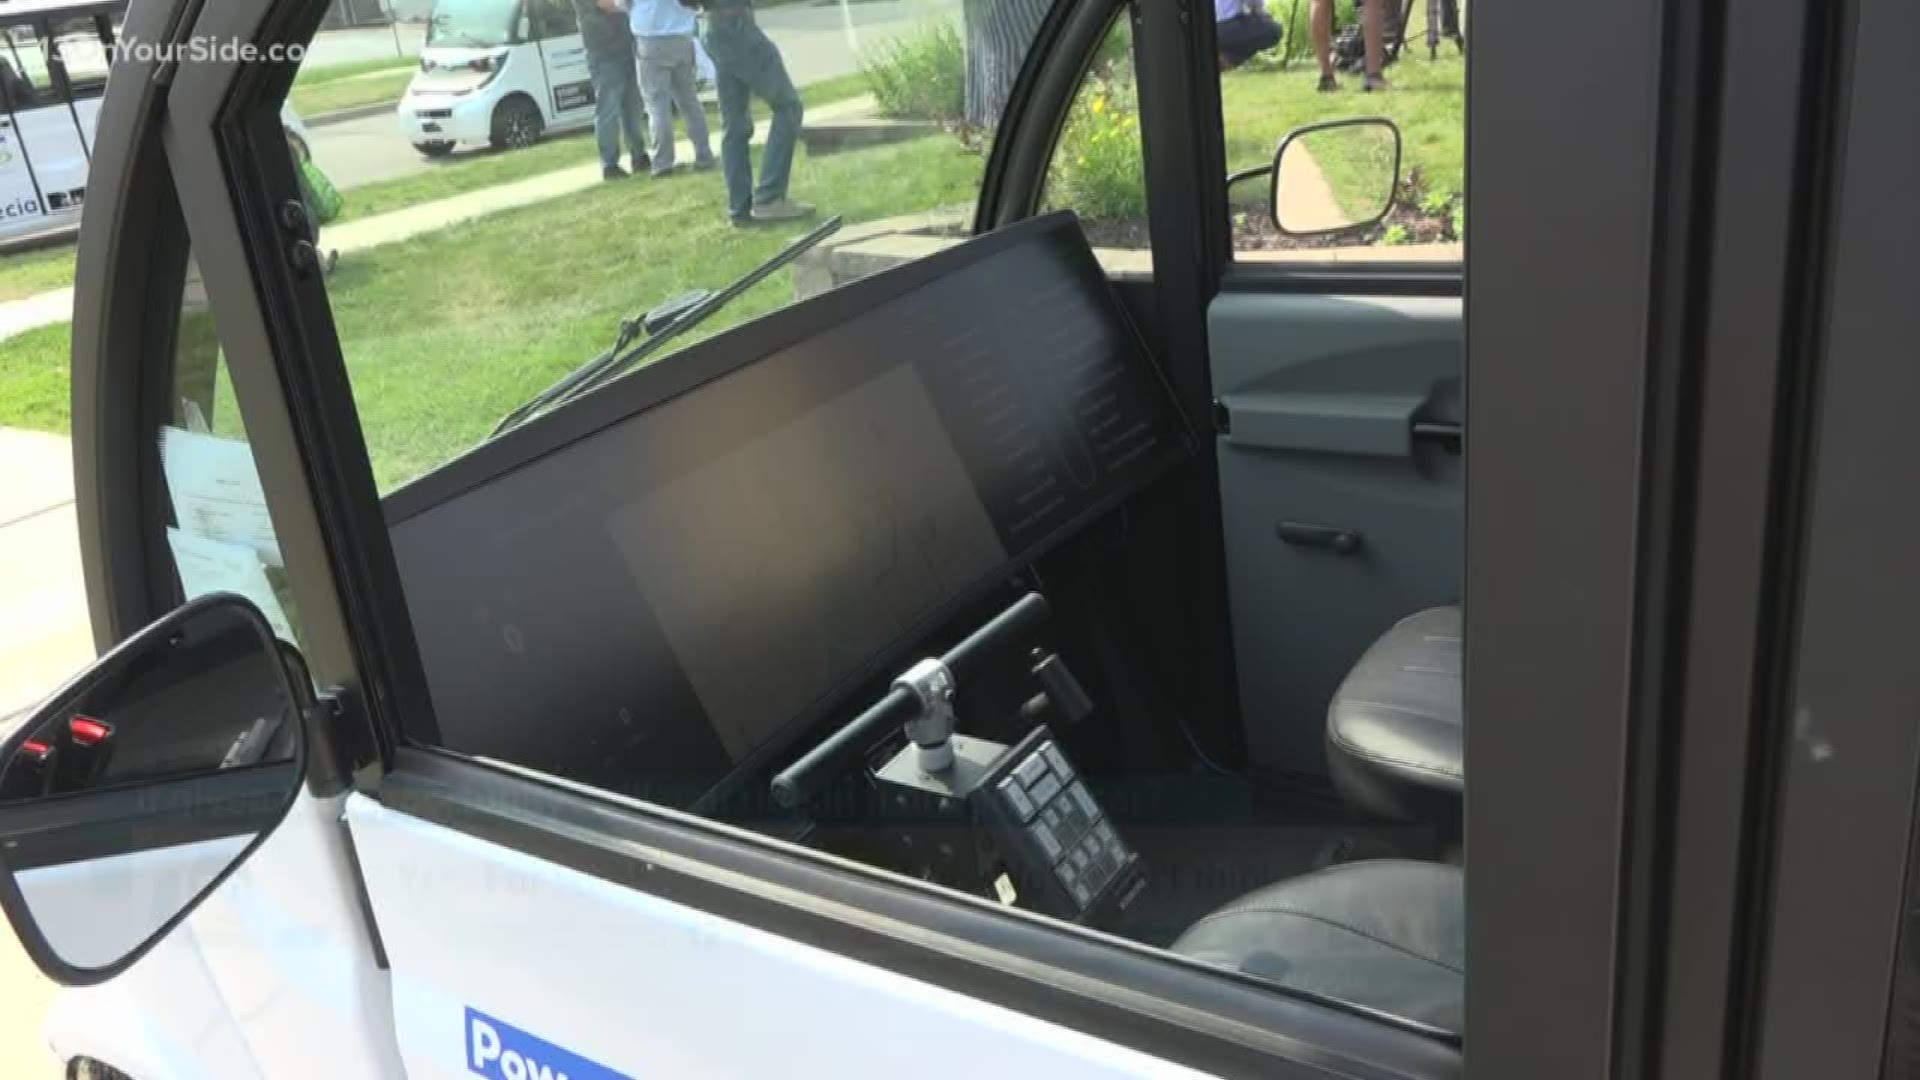 Self-driving cars hit the roads in Grand Rapids